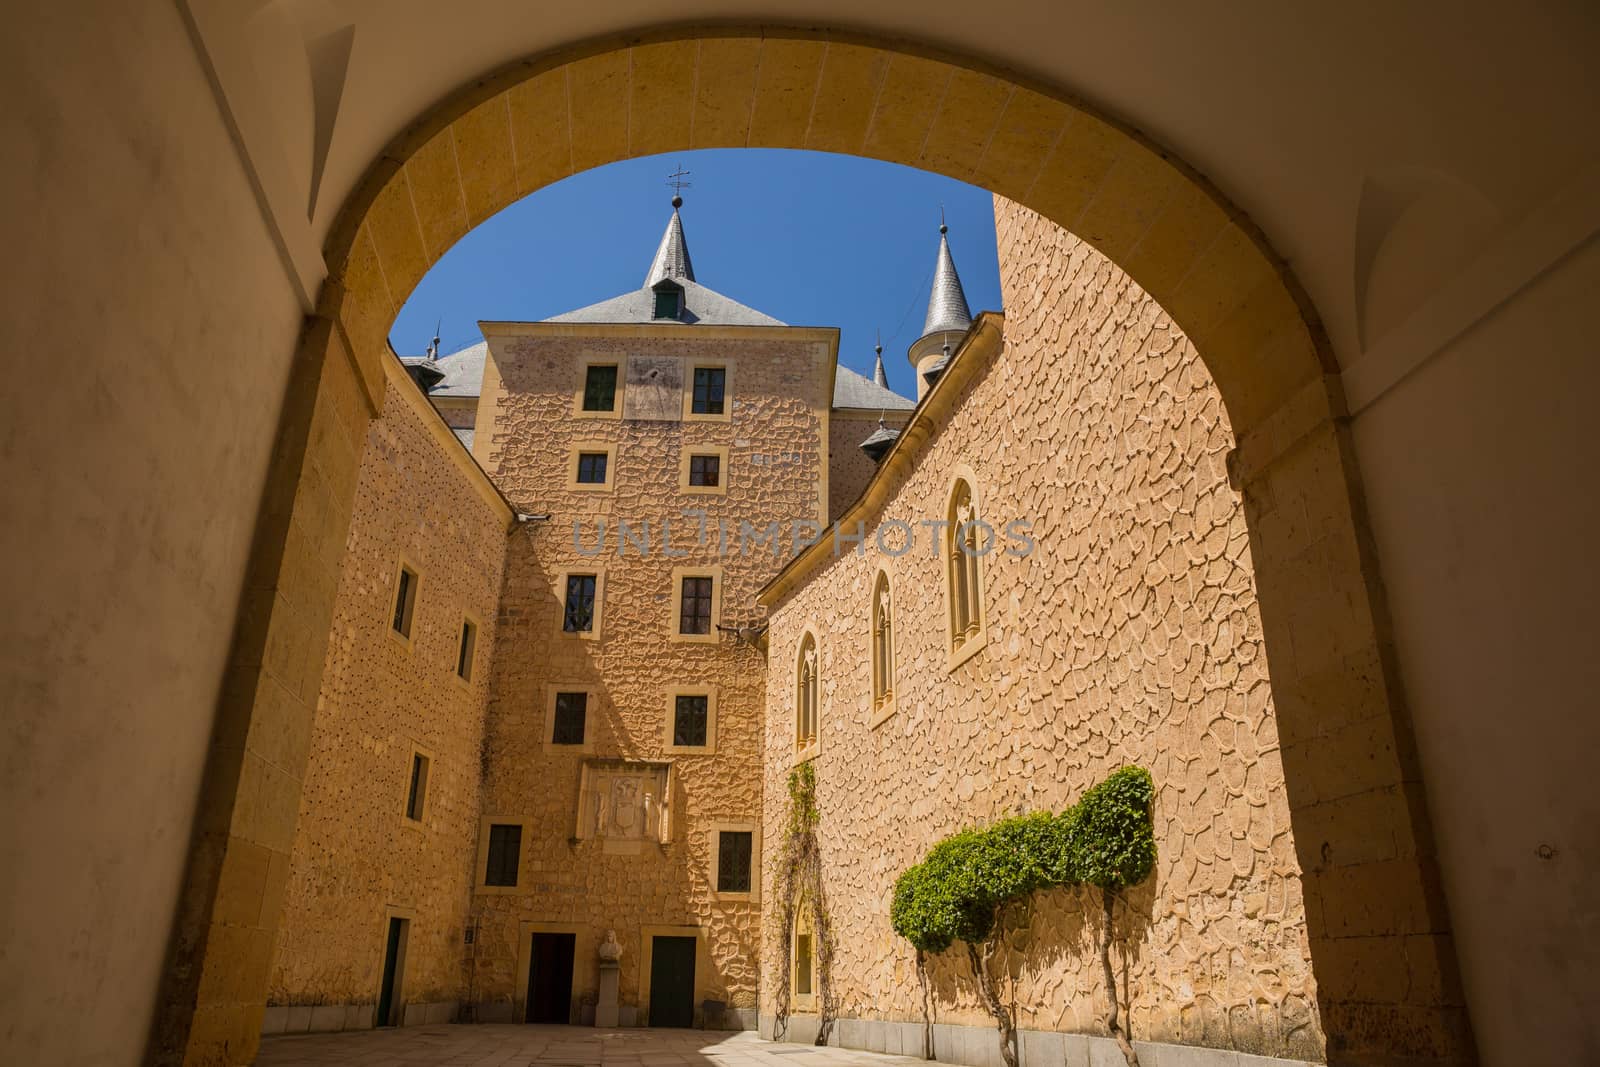 Segovia, Spain: The famous Alcazar castle of Segovia, Castilla y Leon, Spain